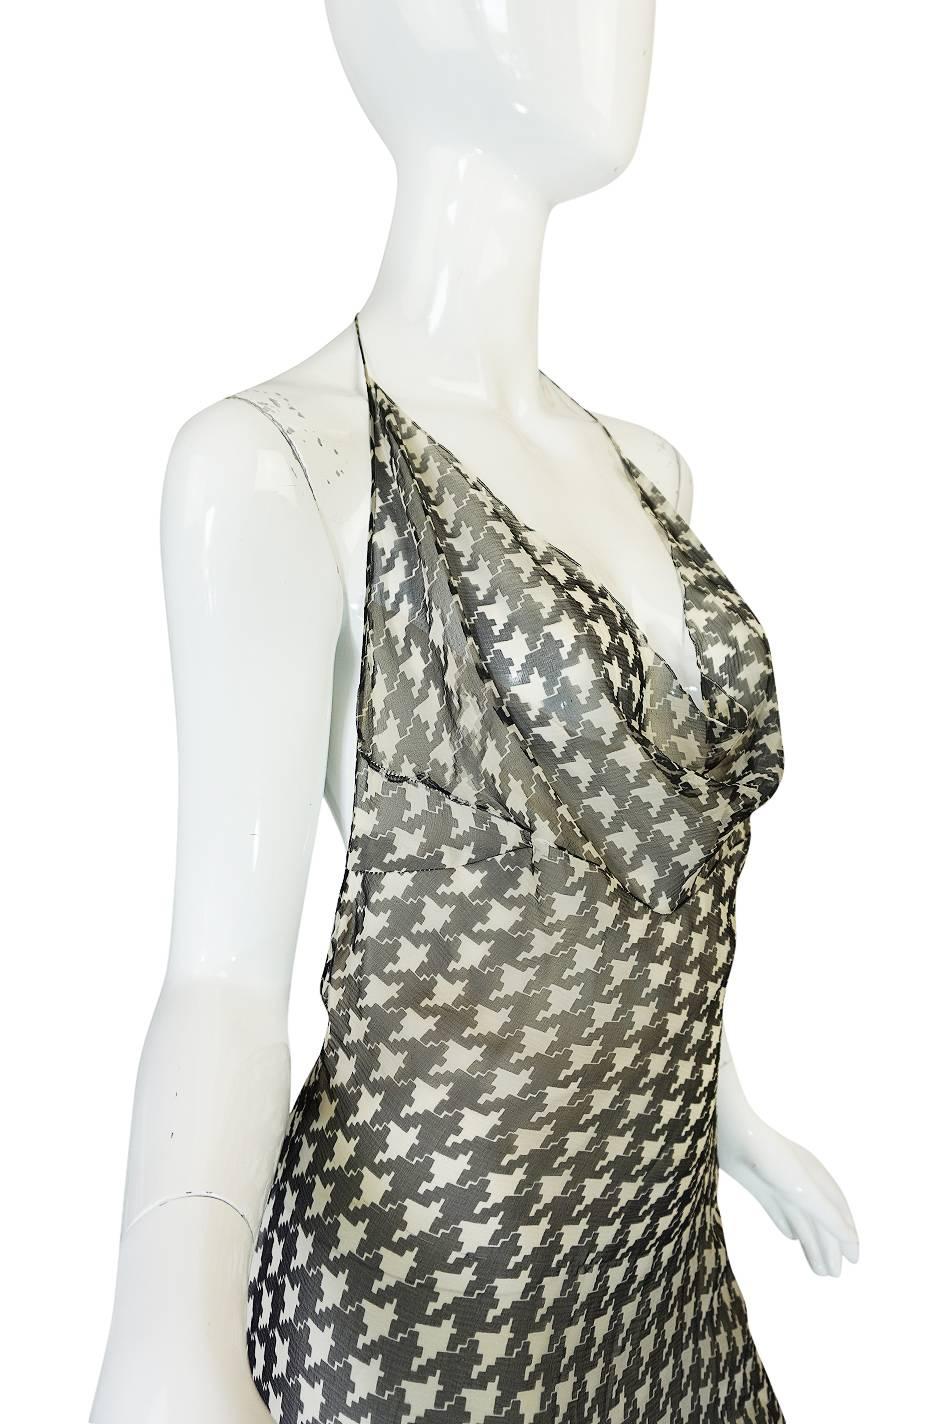 Early 2000s Galliano for Dior Check Silk Chiffon Bias Cut Dress 1